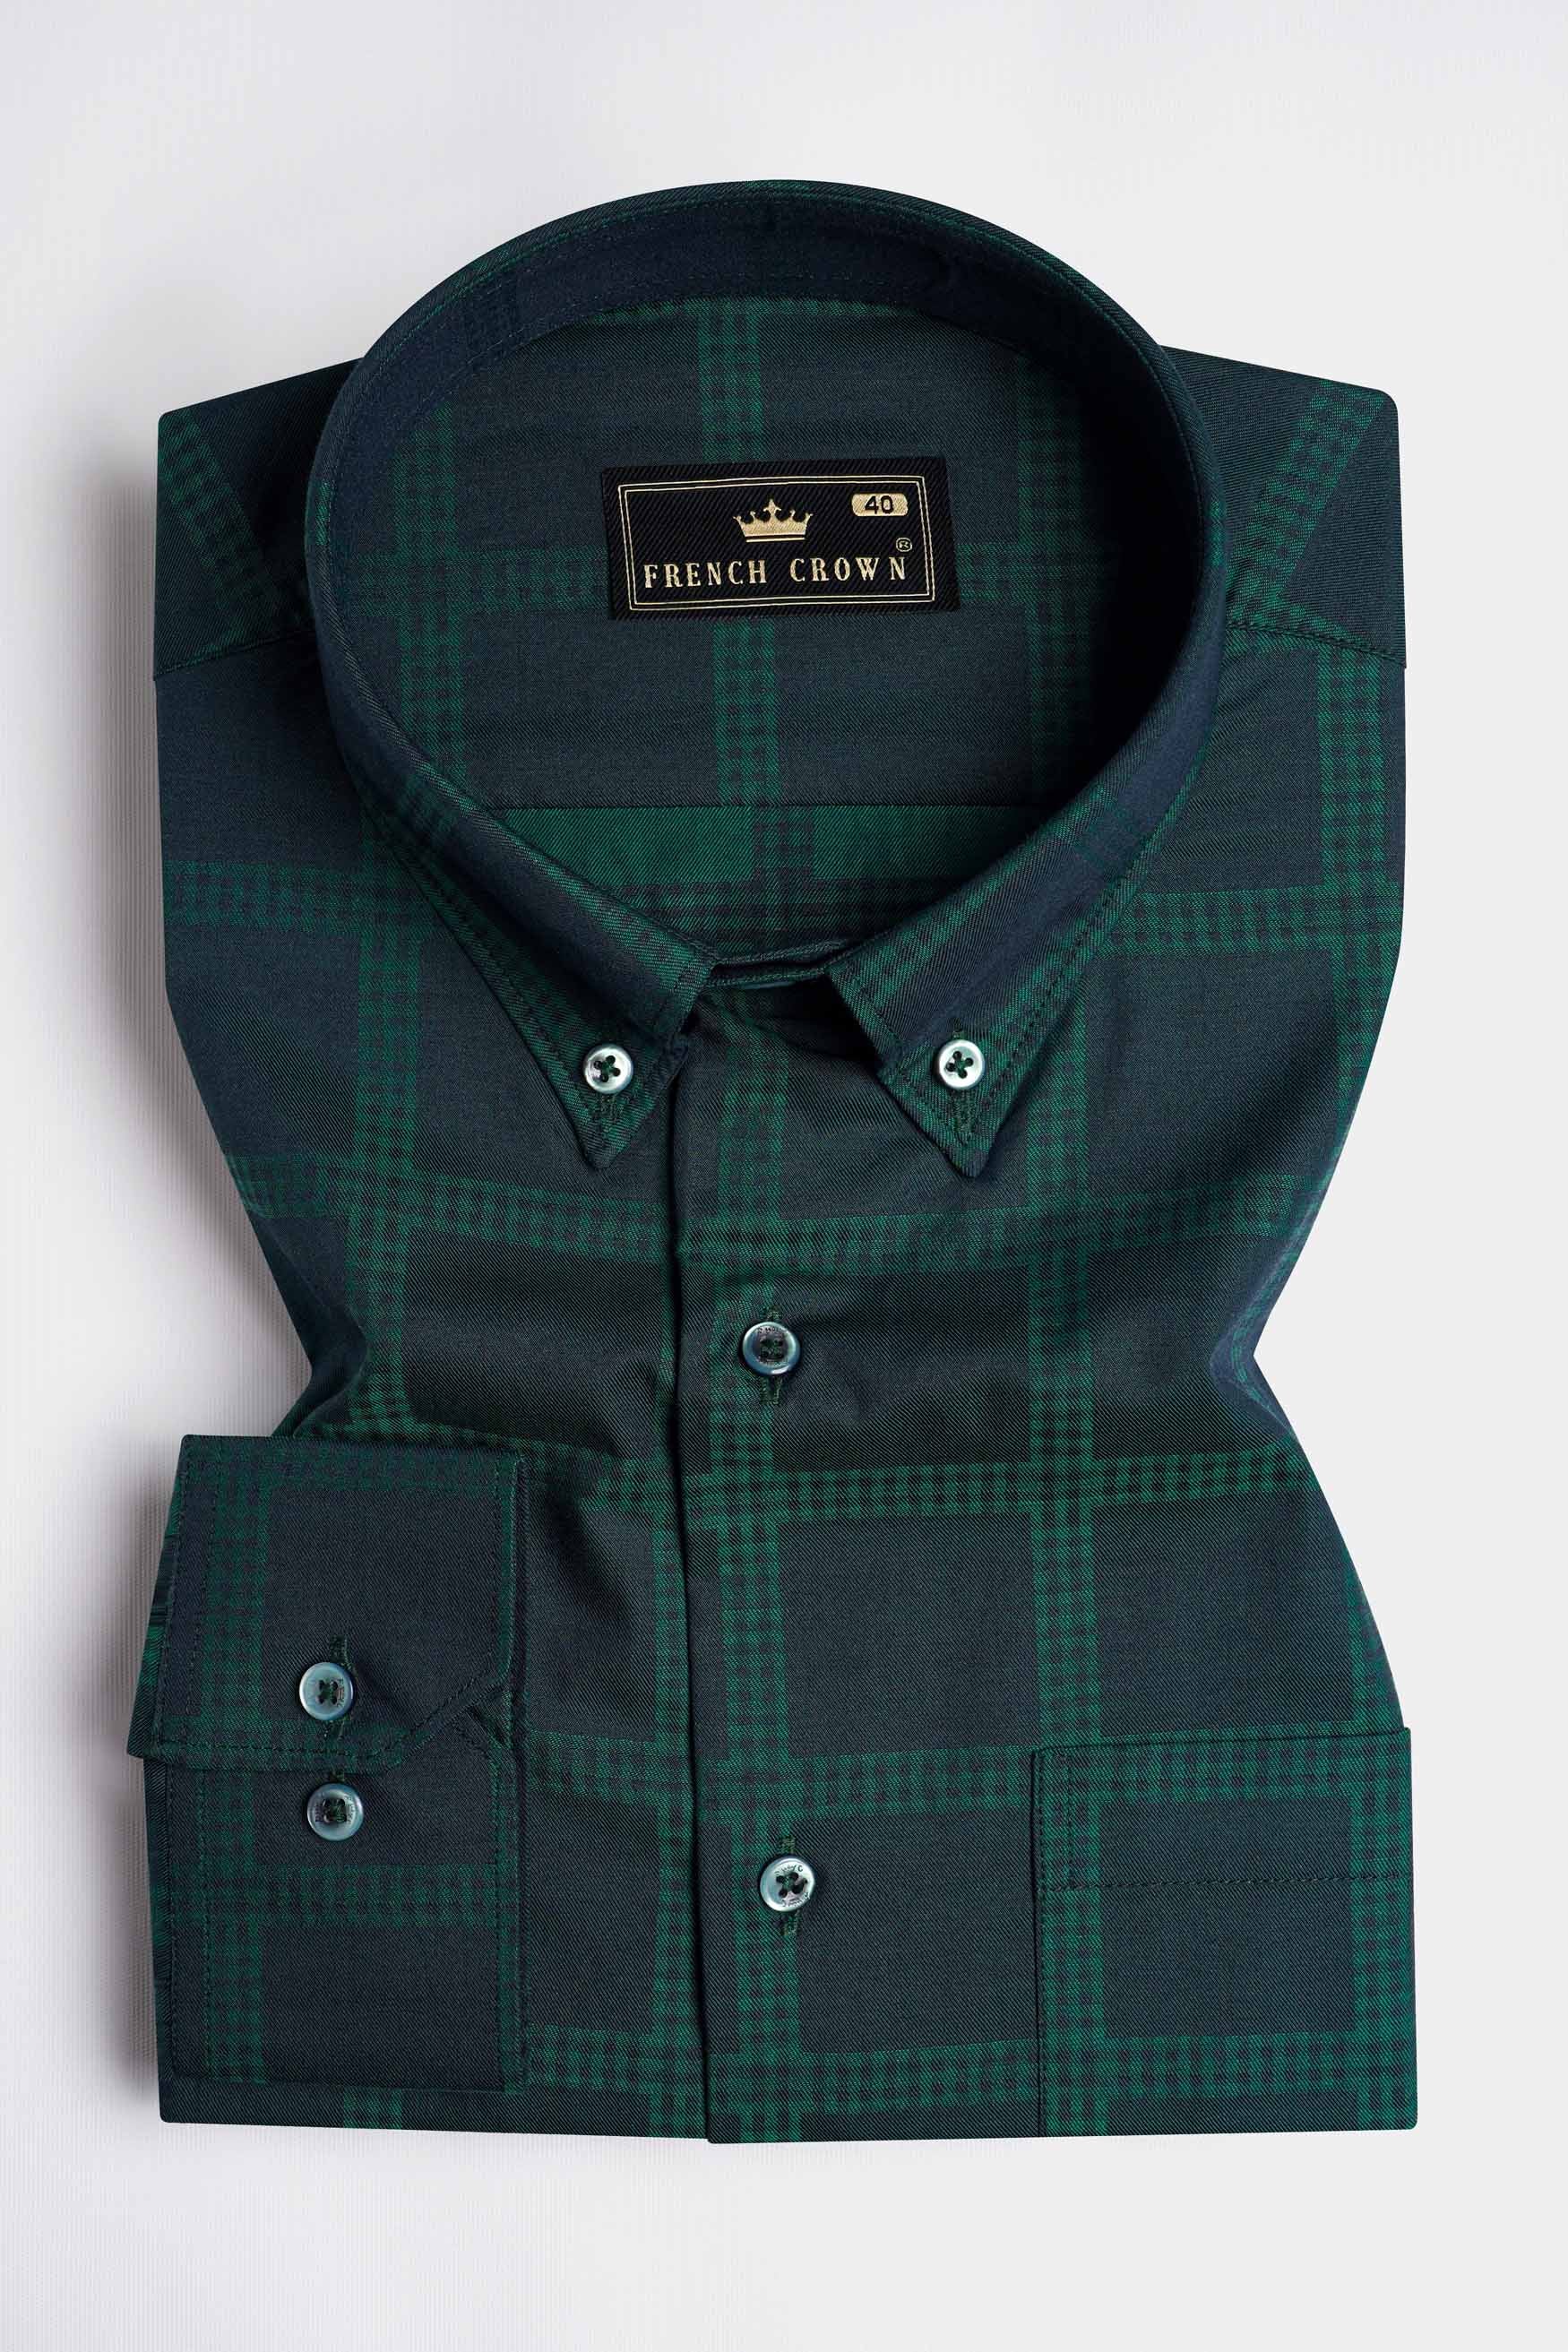 Gunmetal Blue and Plantation Green Checkered Jacquard Textured Premium Giza Cotton Shirt